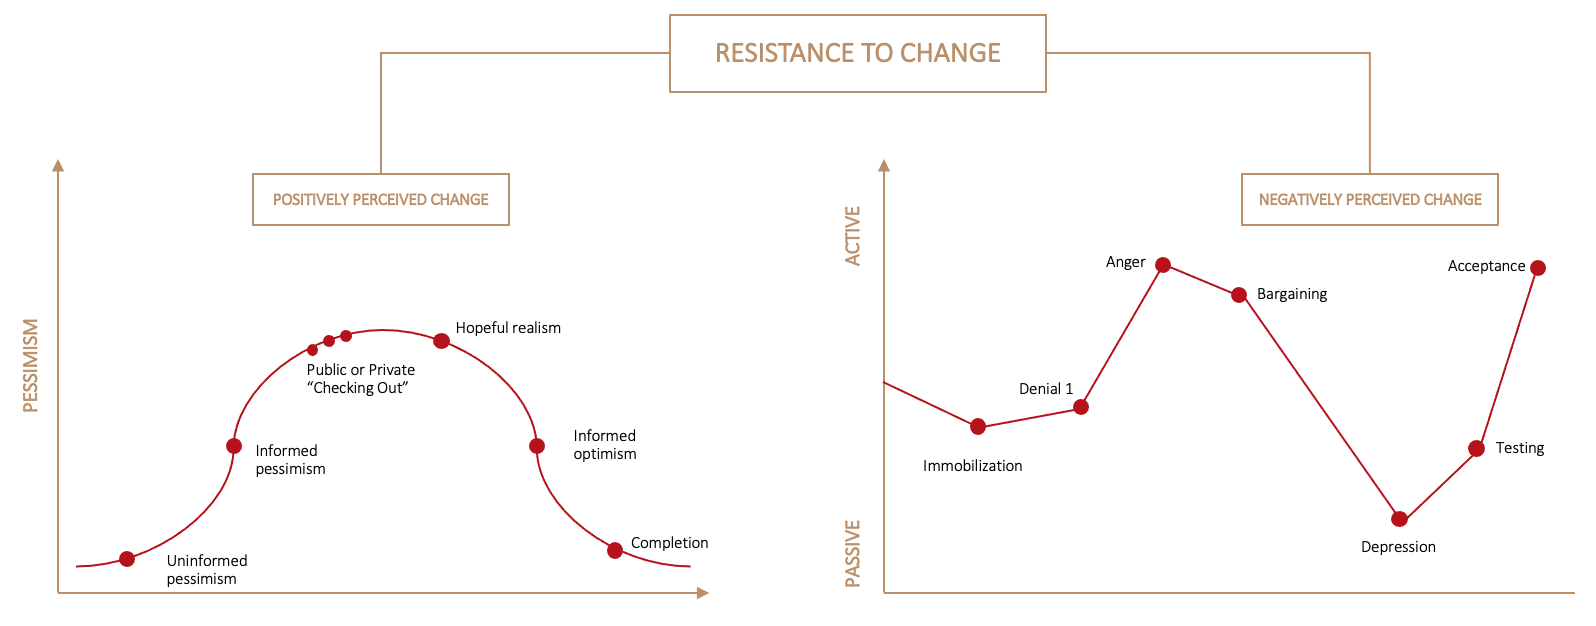 resistance_change_2.png